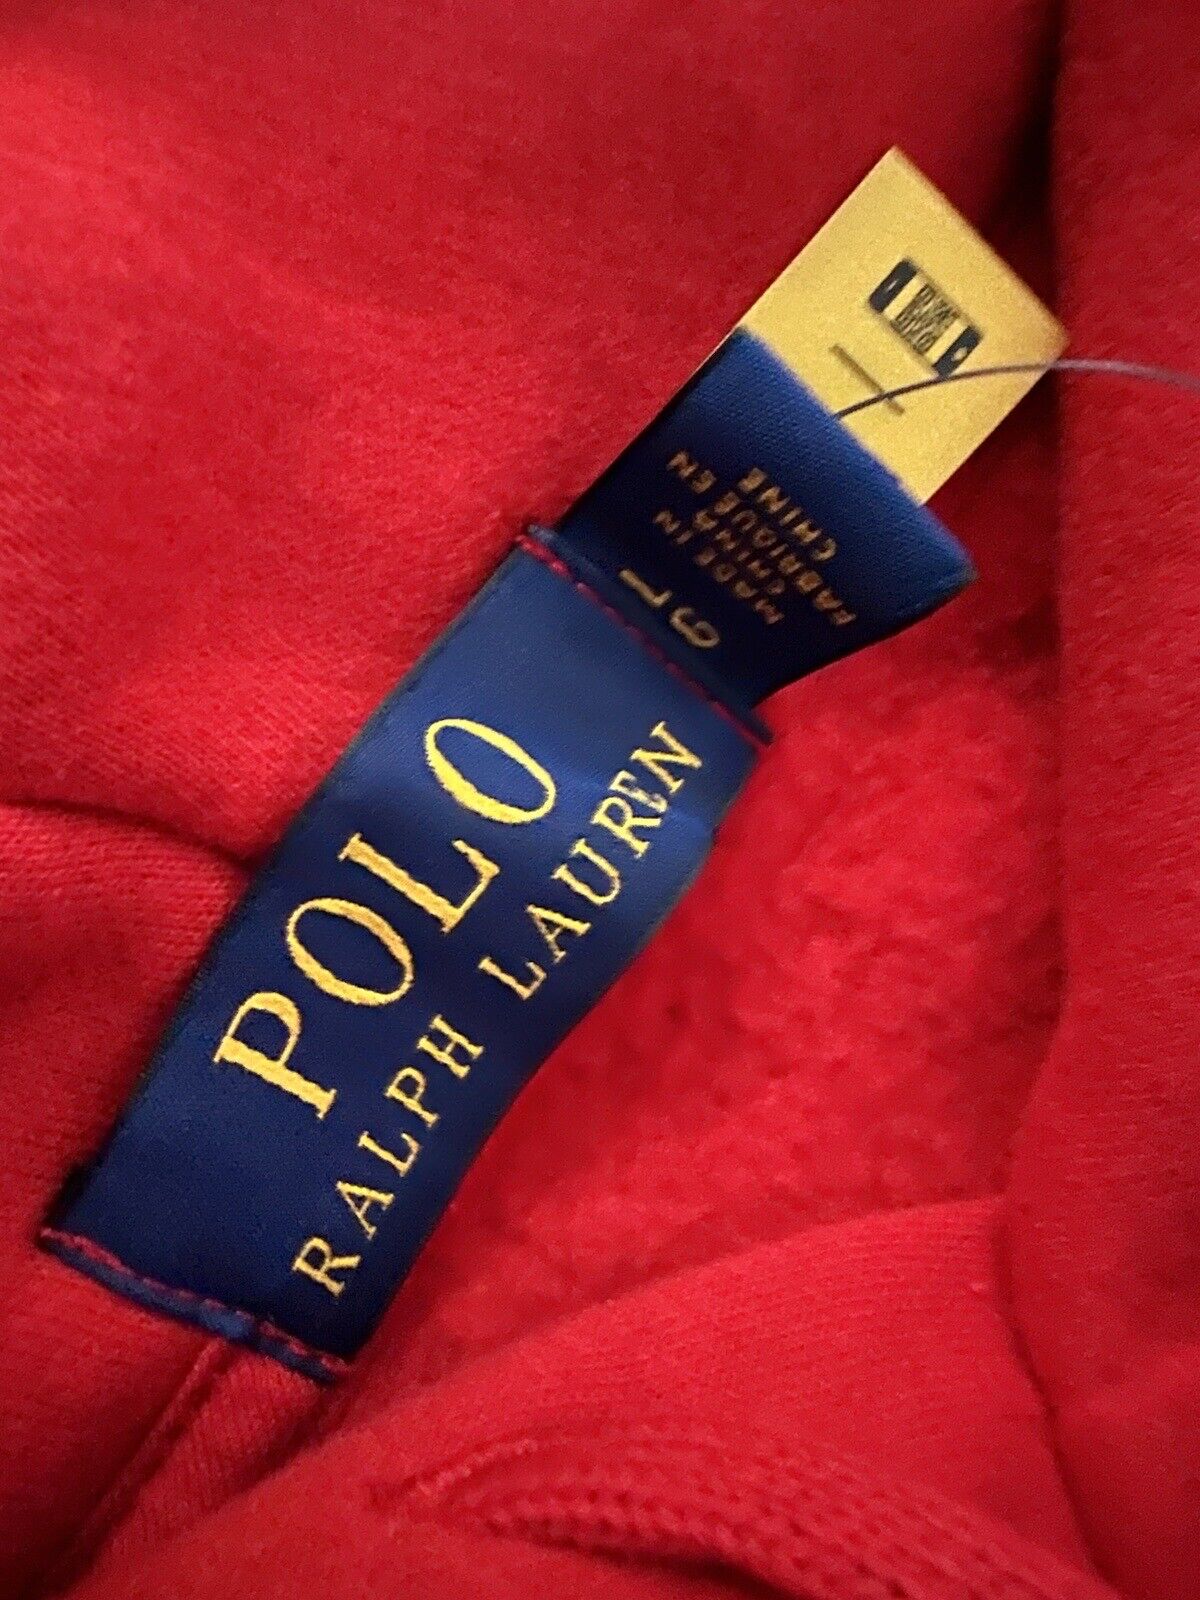 NWT $188 Polo Ralph Lauren Bear Ralph Mug Флисовая толстовка с капюшоном, красная, большая 